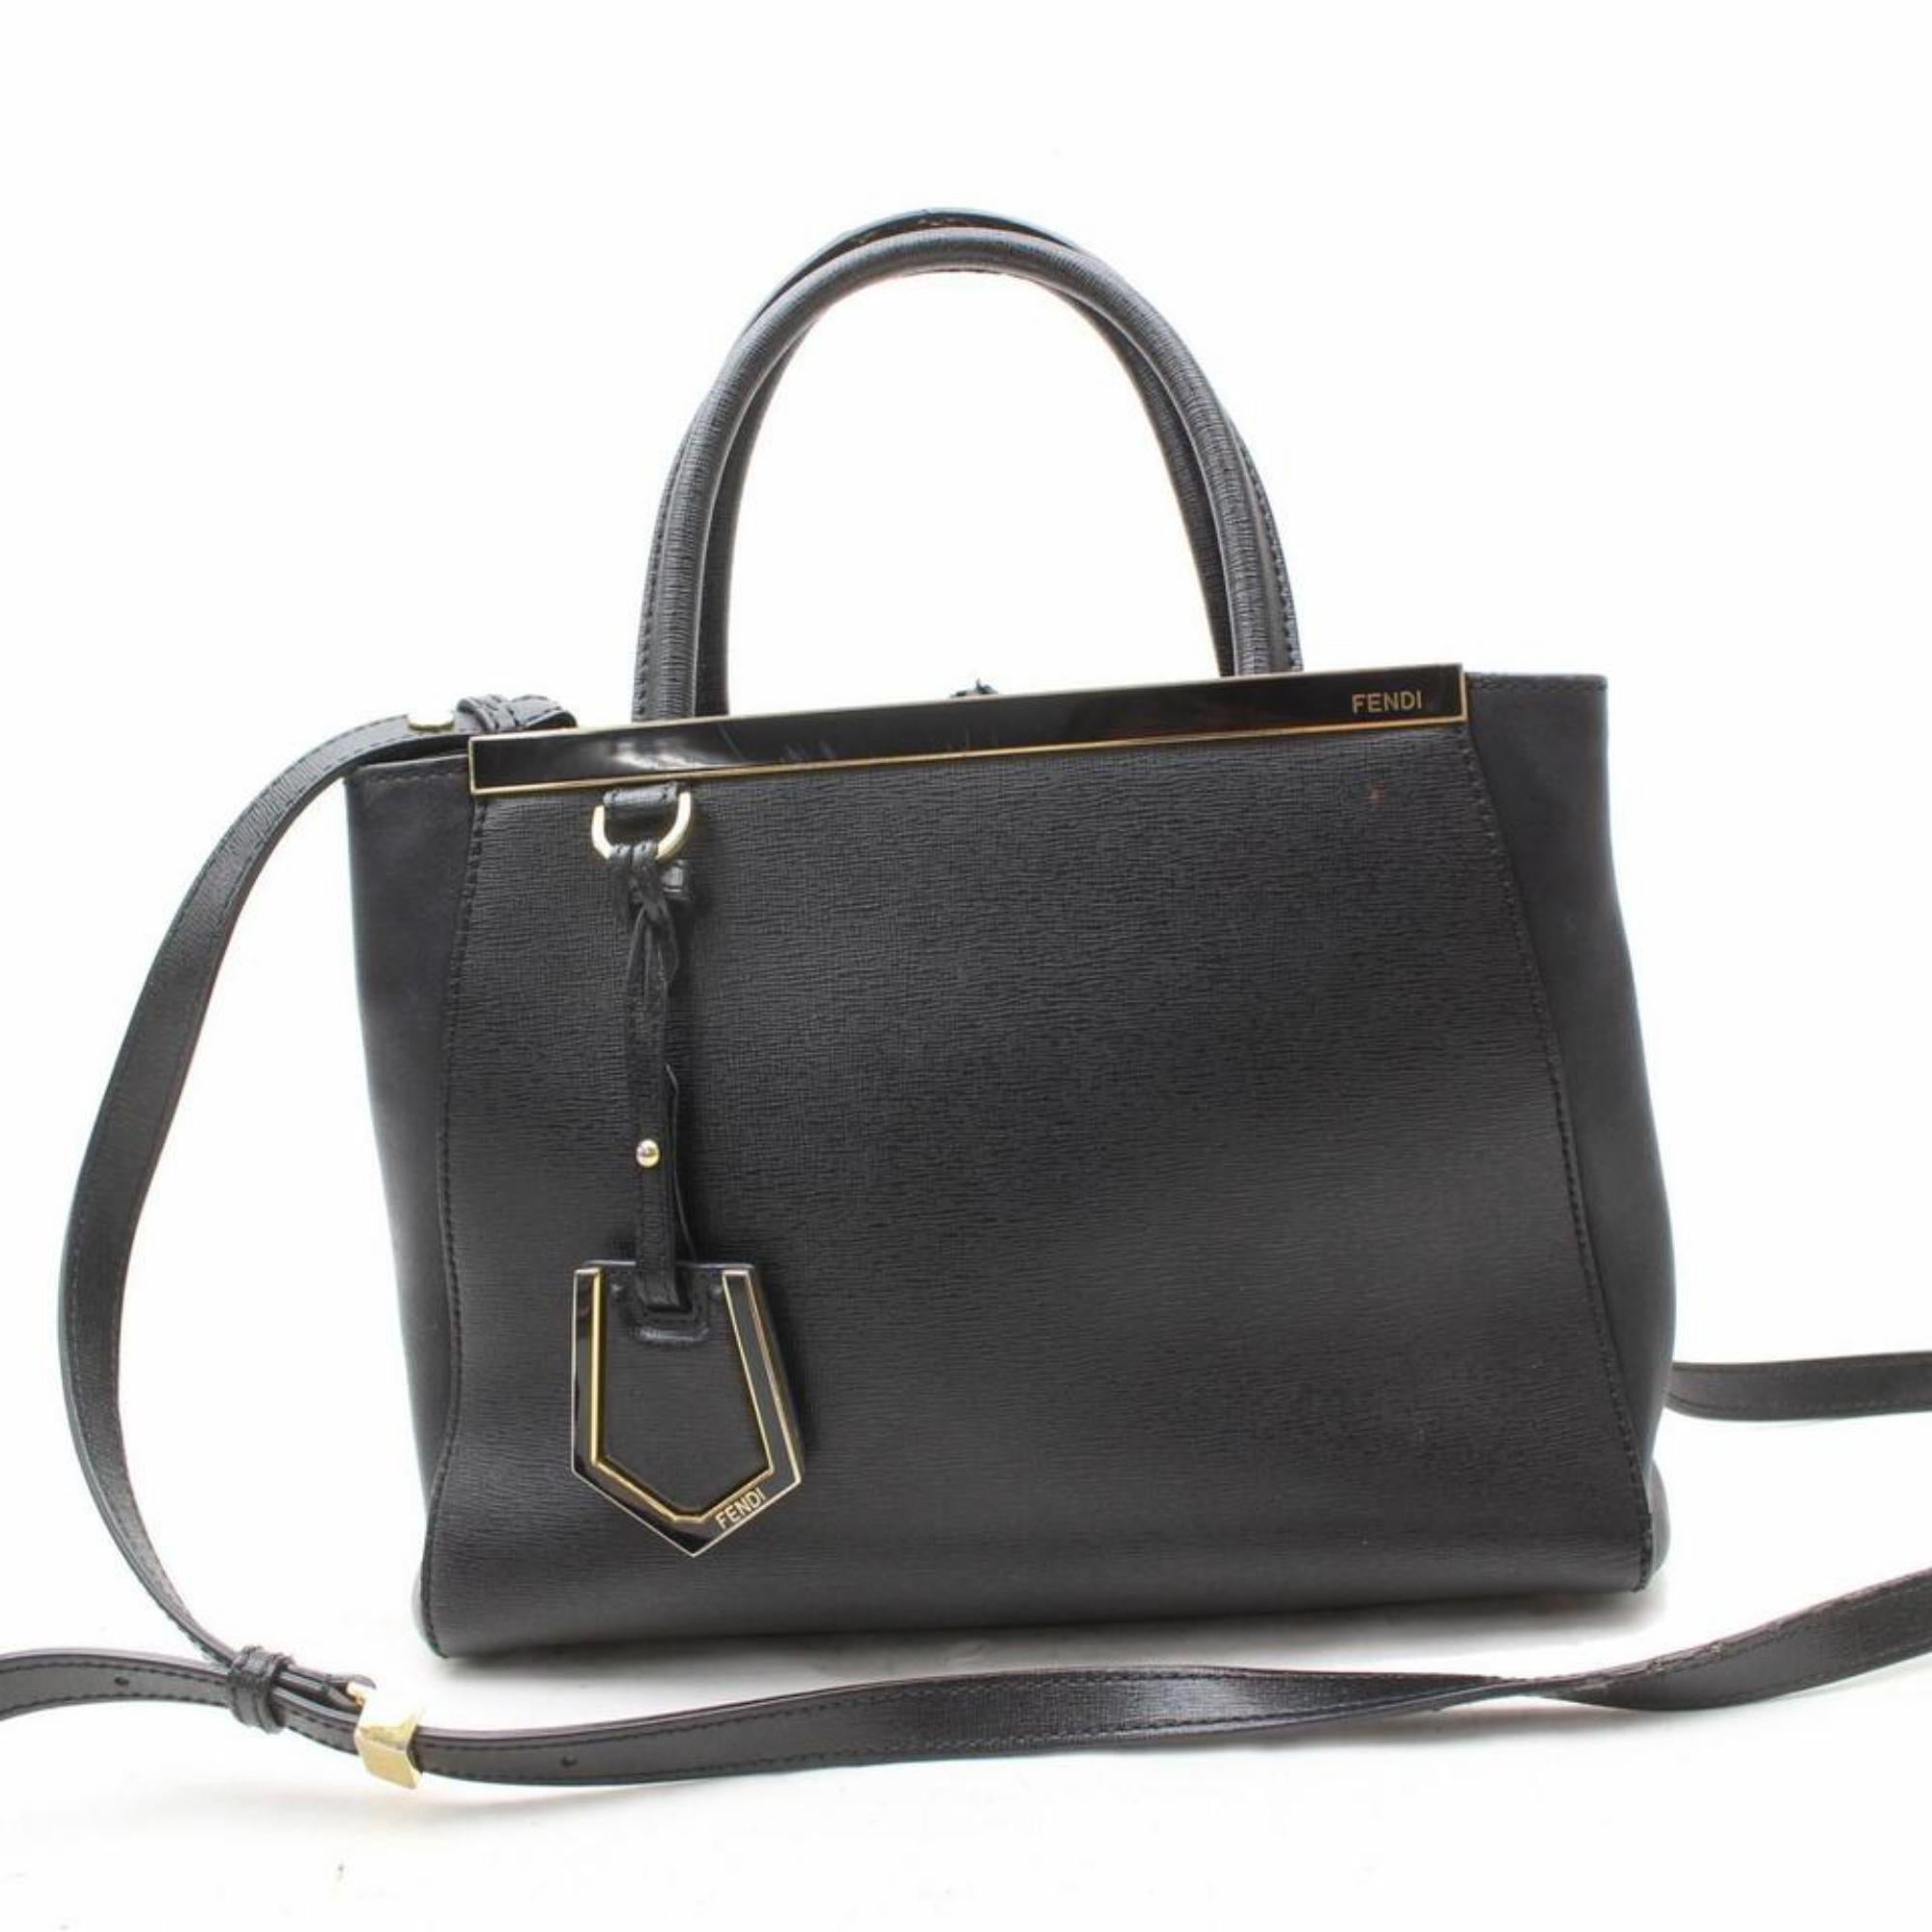 Fendi Petite 2jours 2way Tote 869621 Black Leather Shoulder Bag For Sale 3